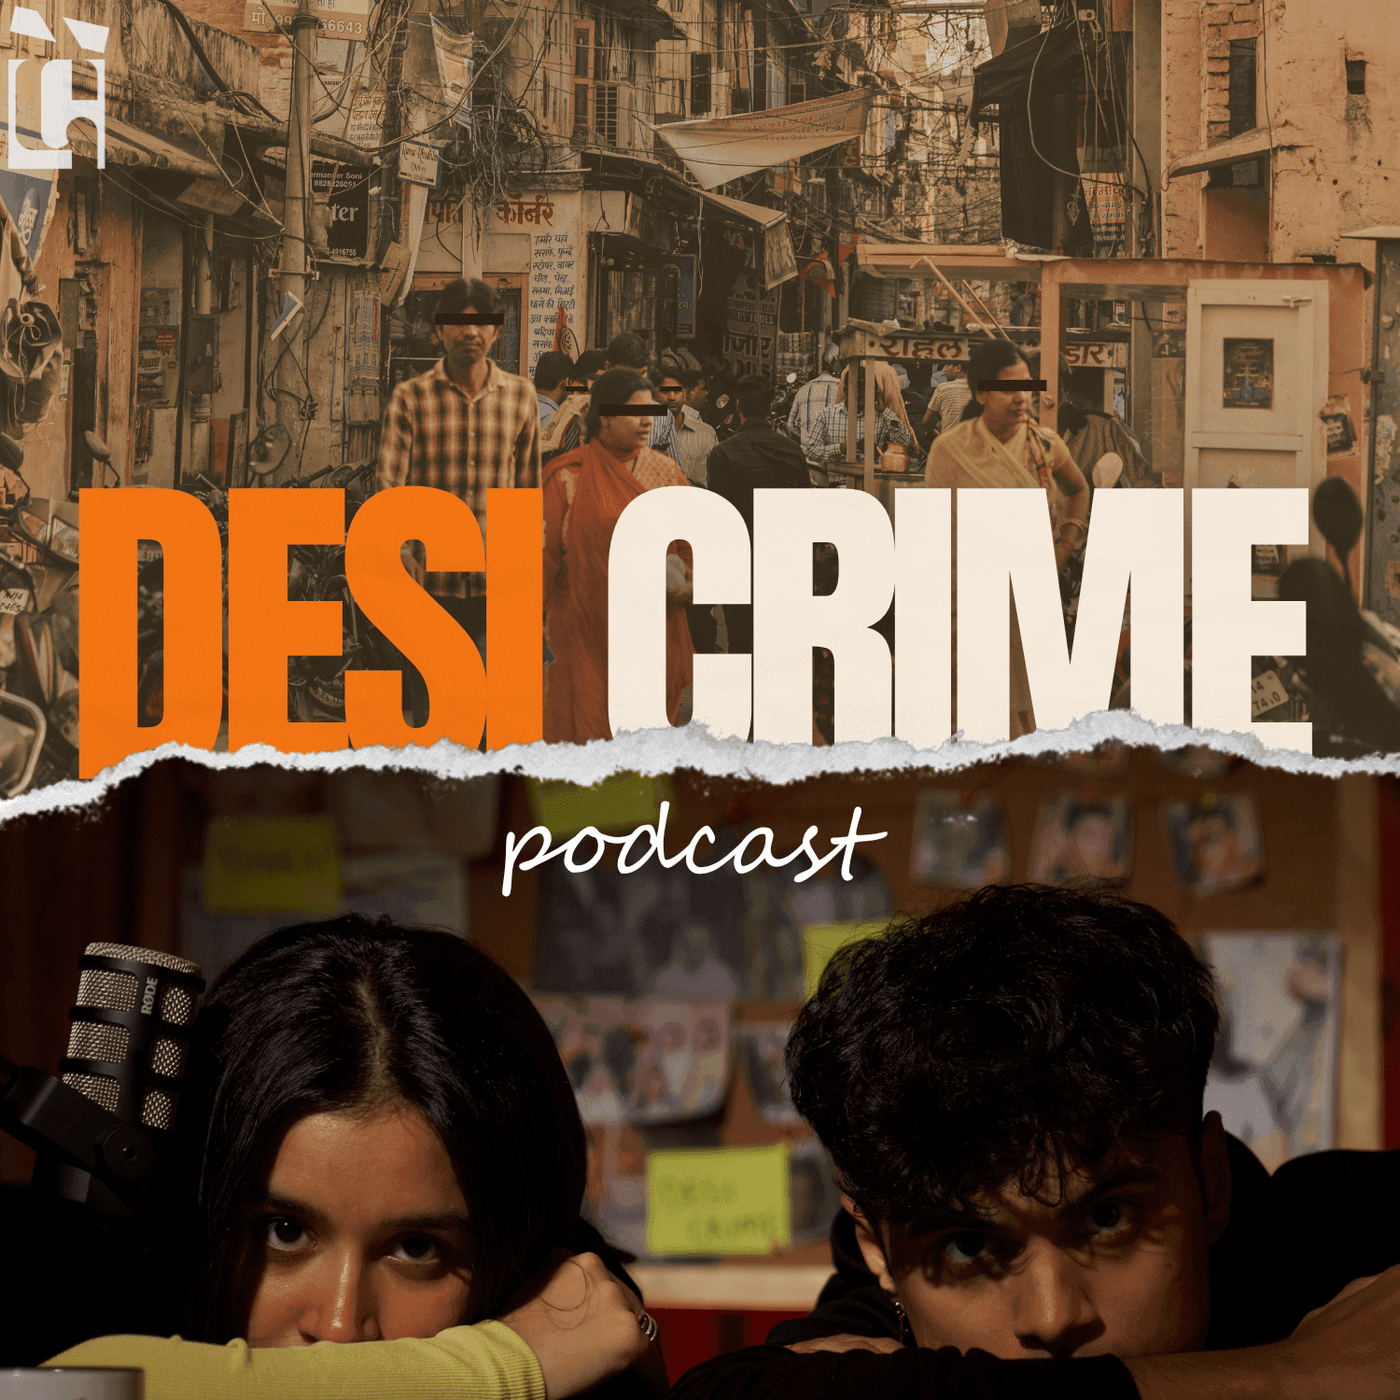 The Desi Crime Podcast podcast show image